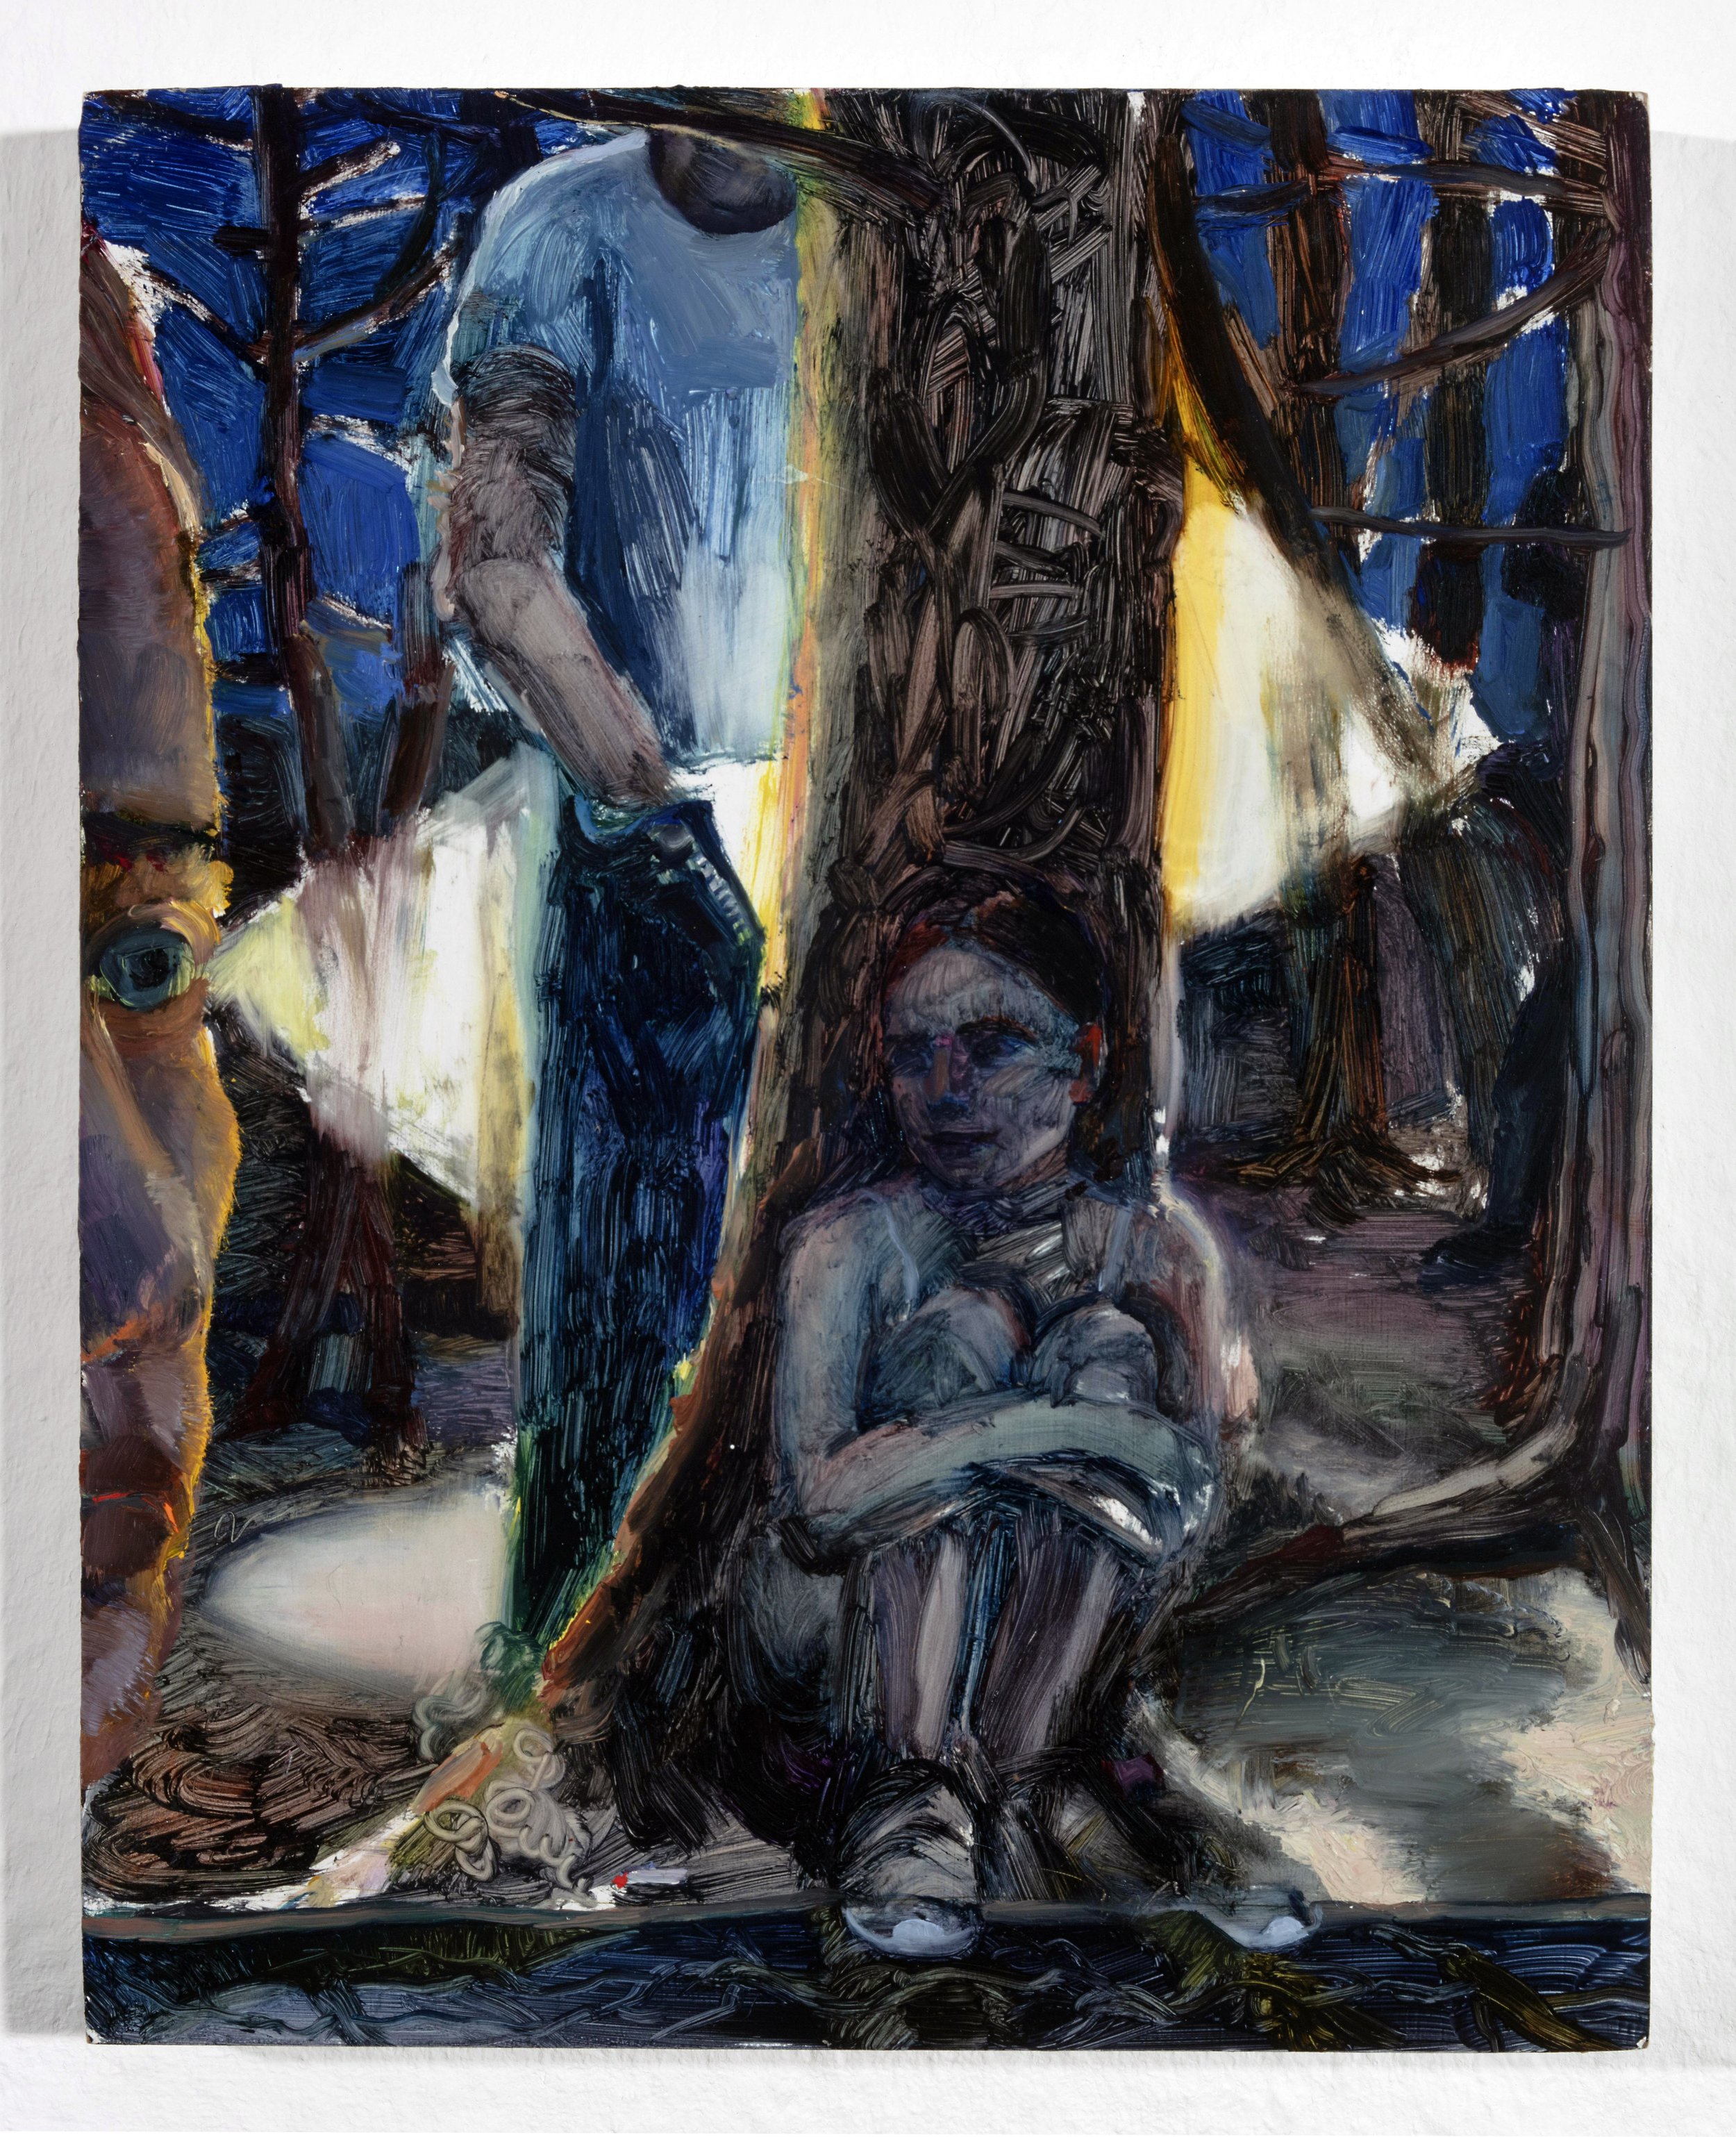   Girl in cedar wood with nikes,  2020, oil on panel, 10 x 8 in 